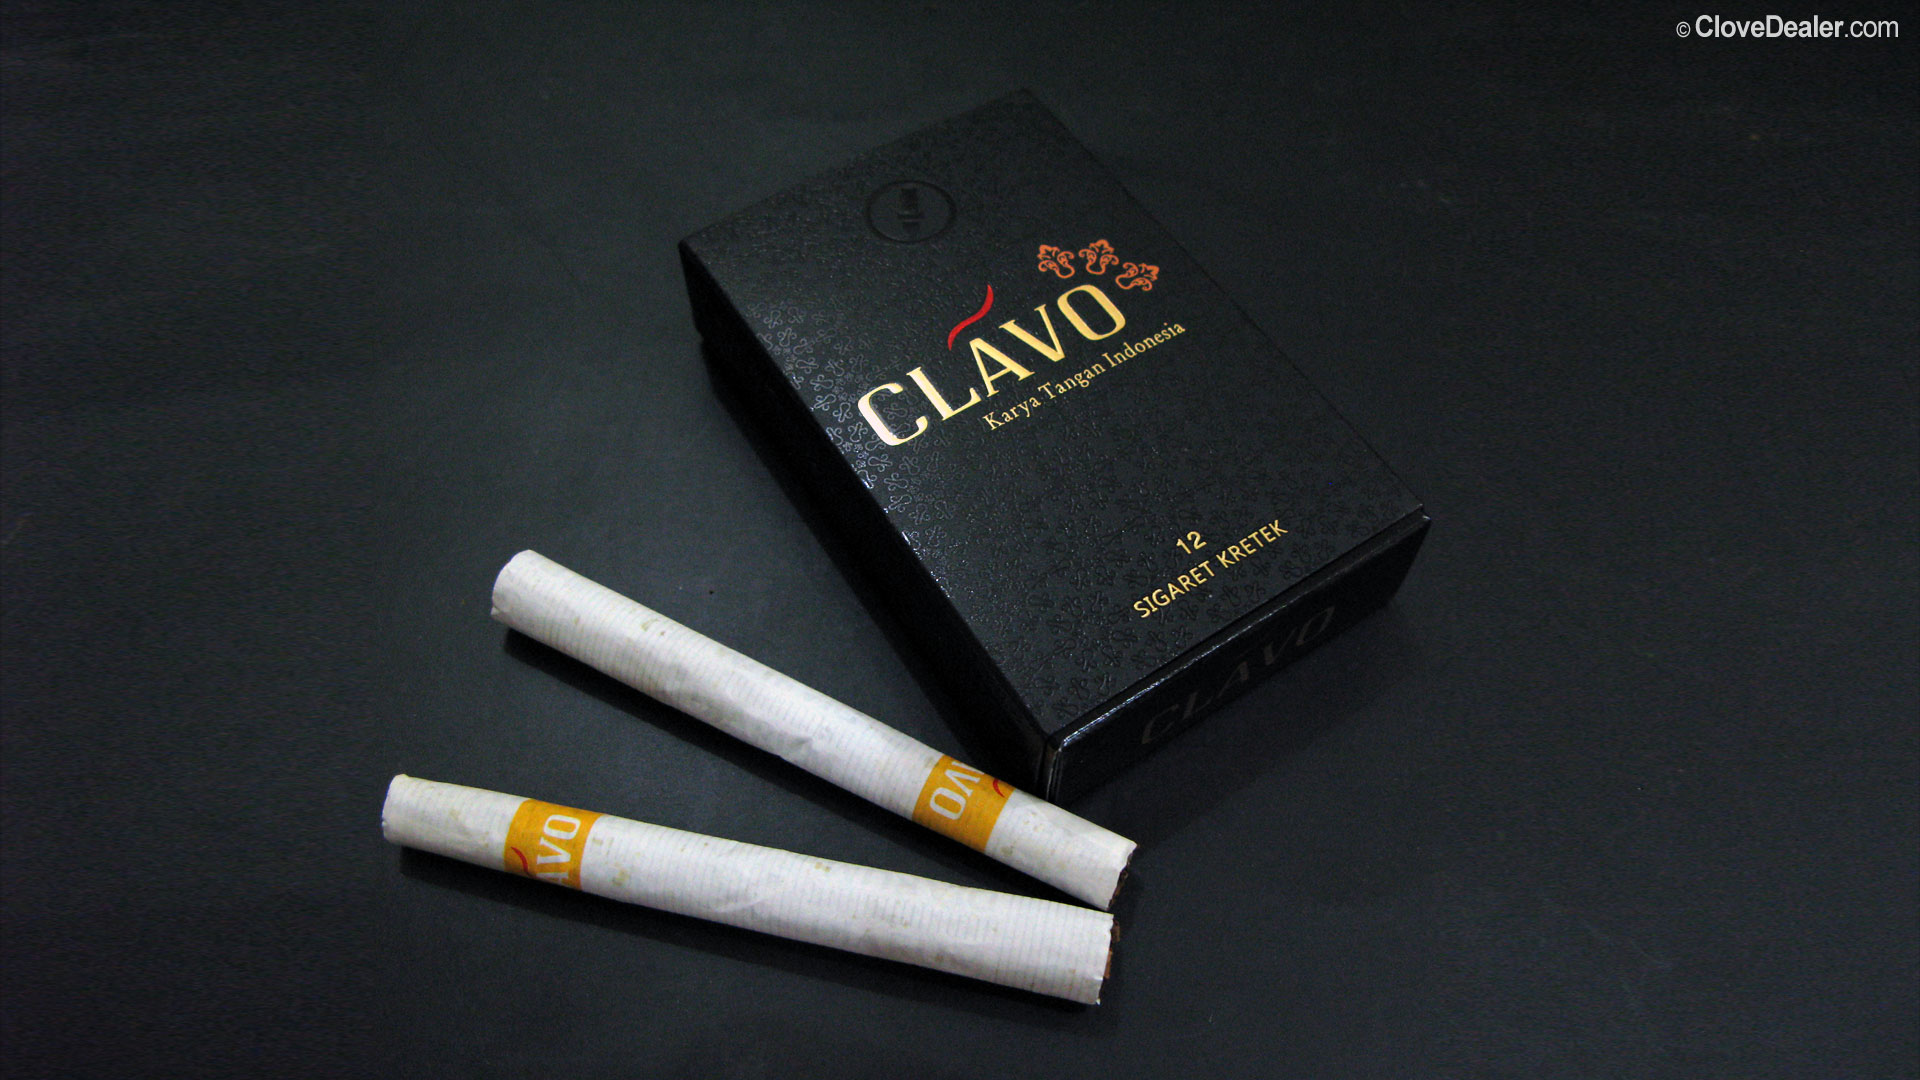 Cigarette Wallpaper Tumblr Clavo smoking wallpapers